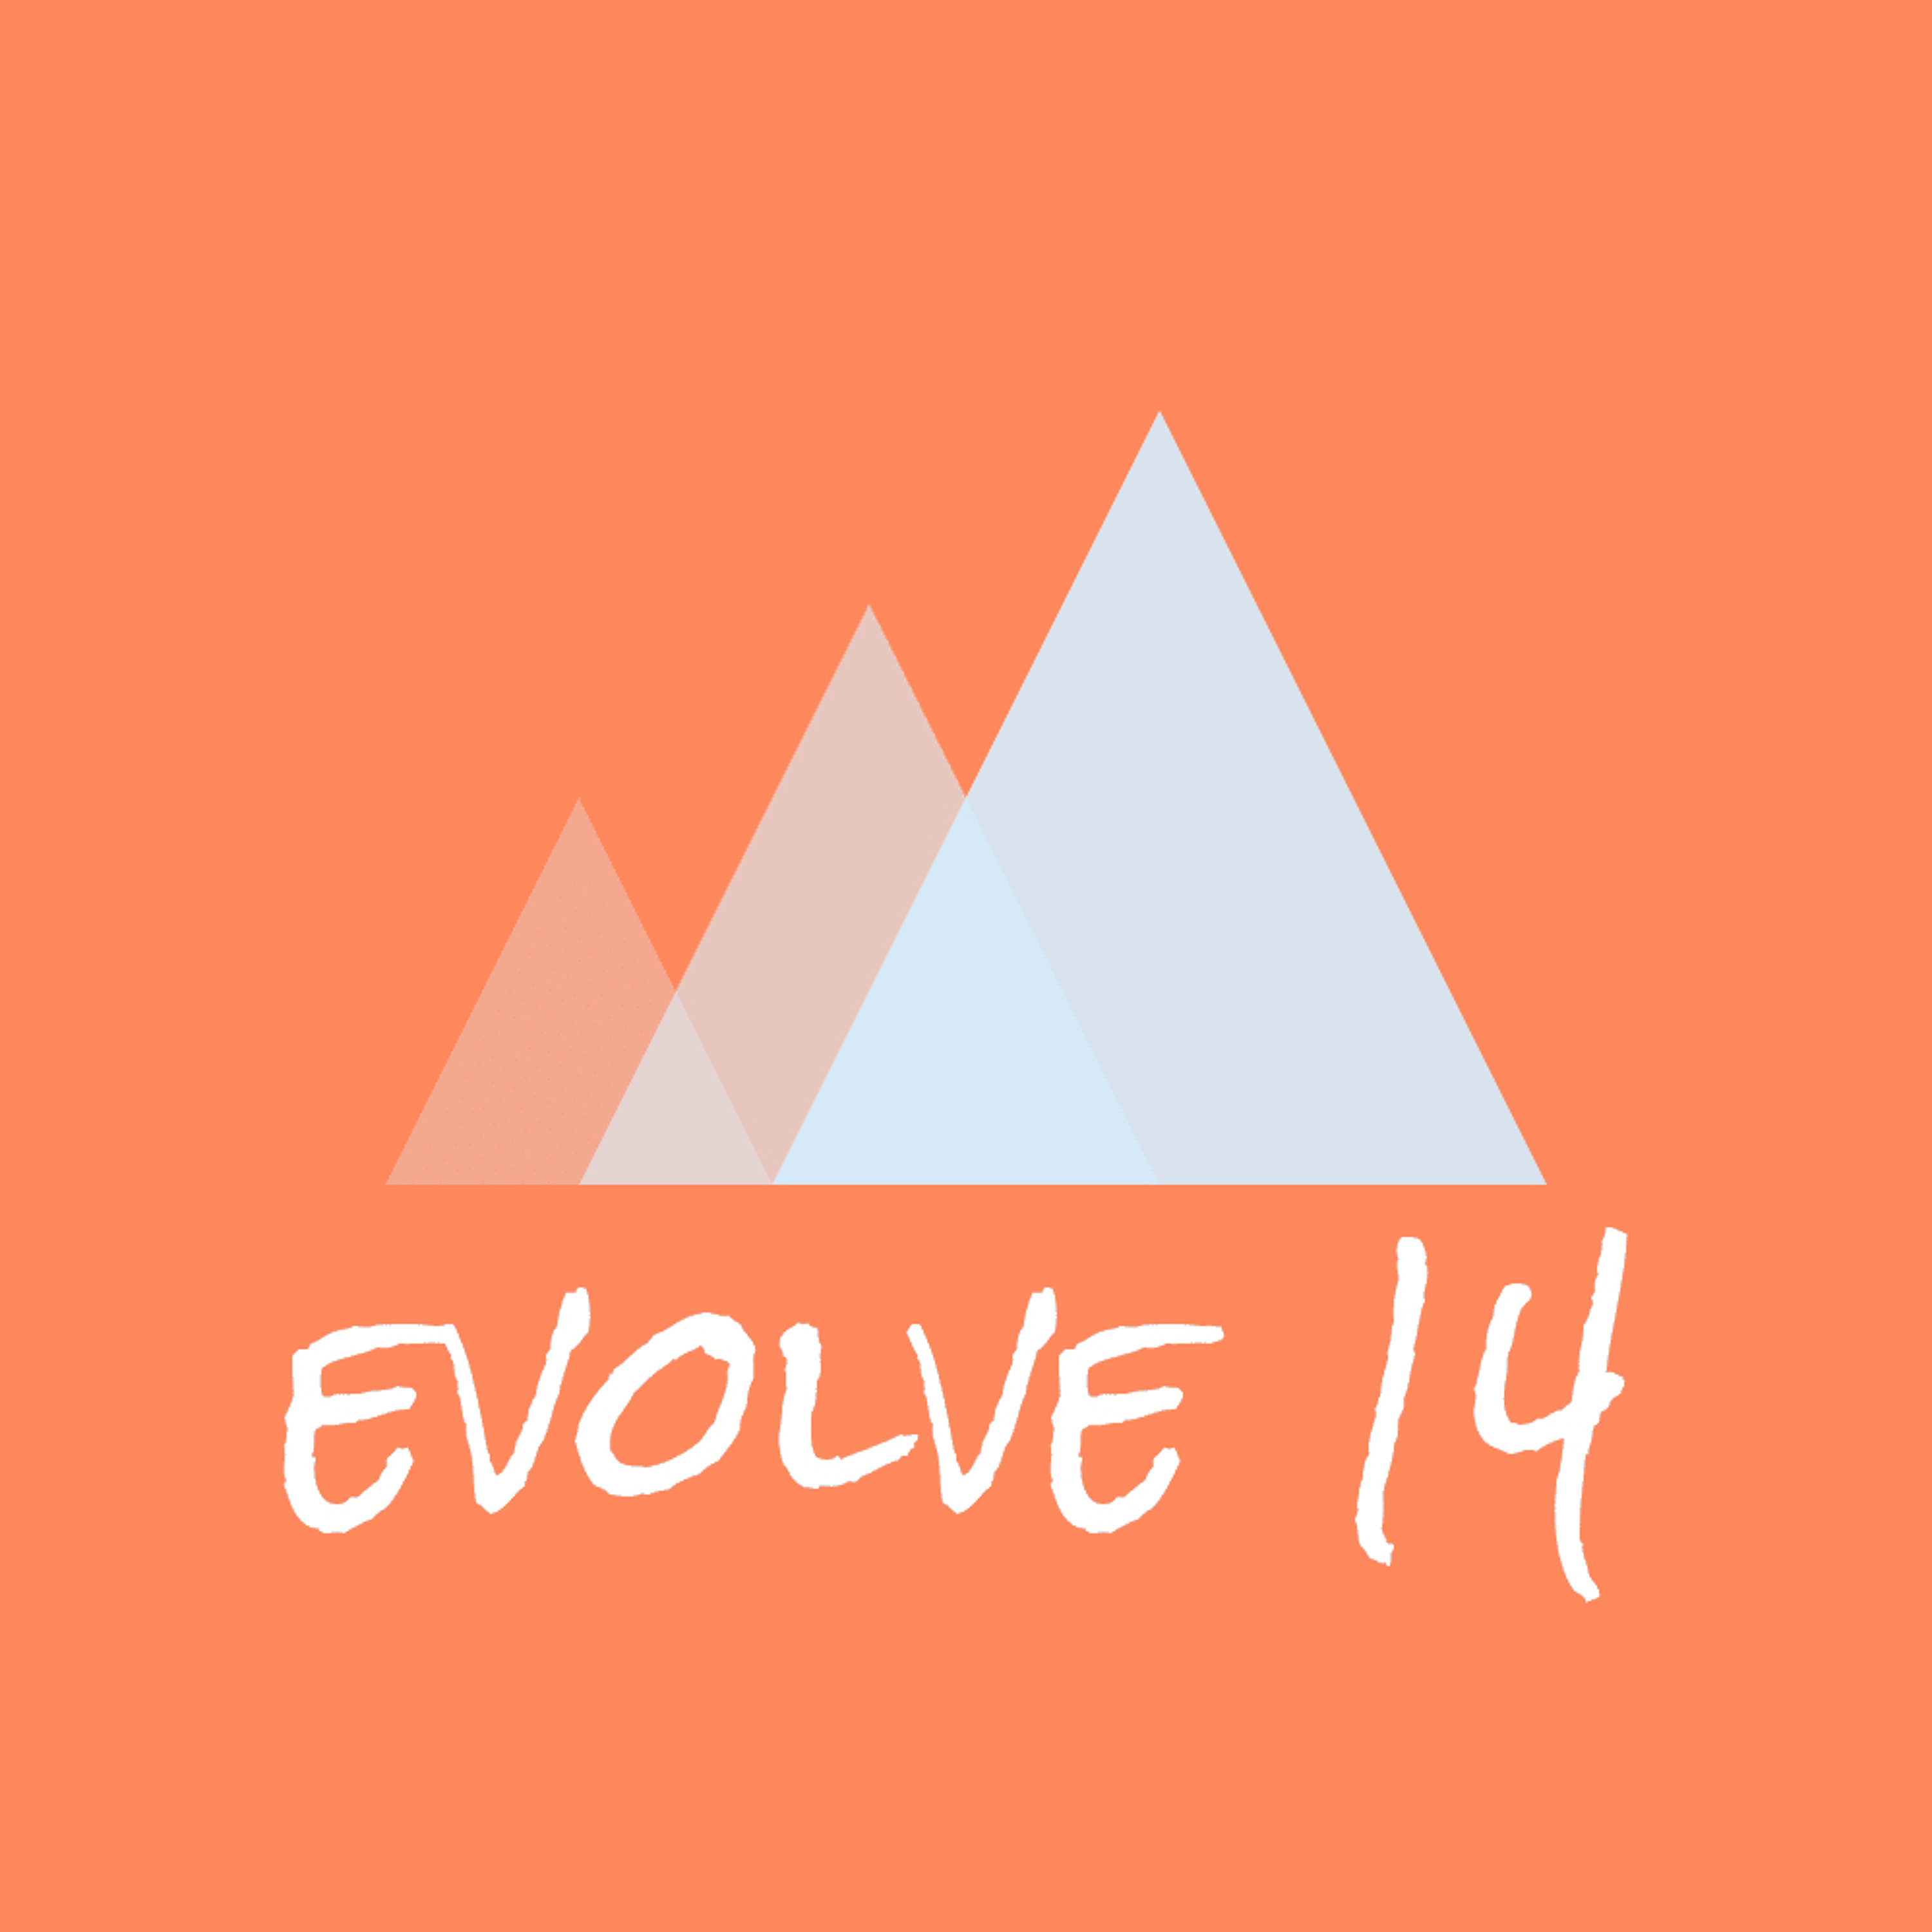 evolve 14